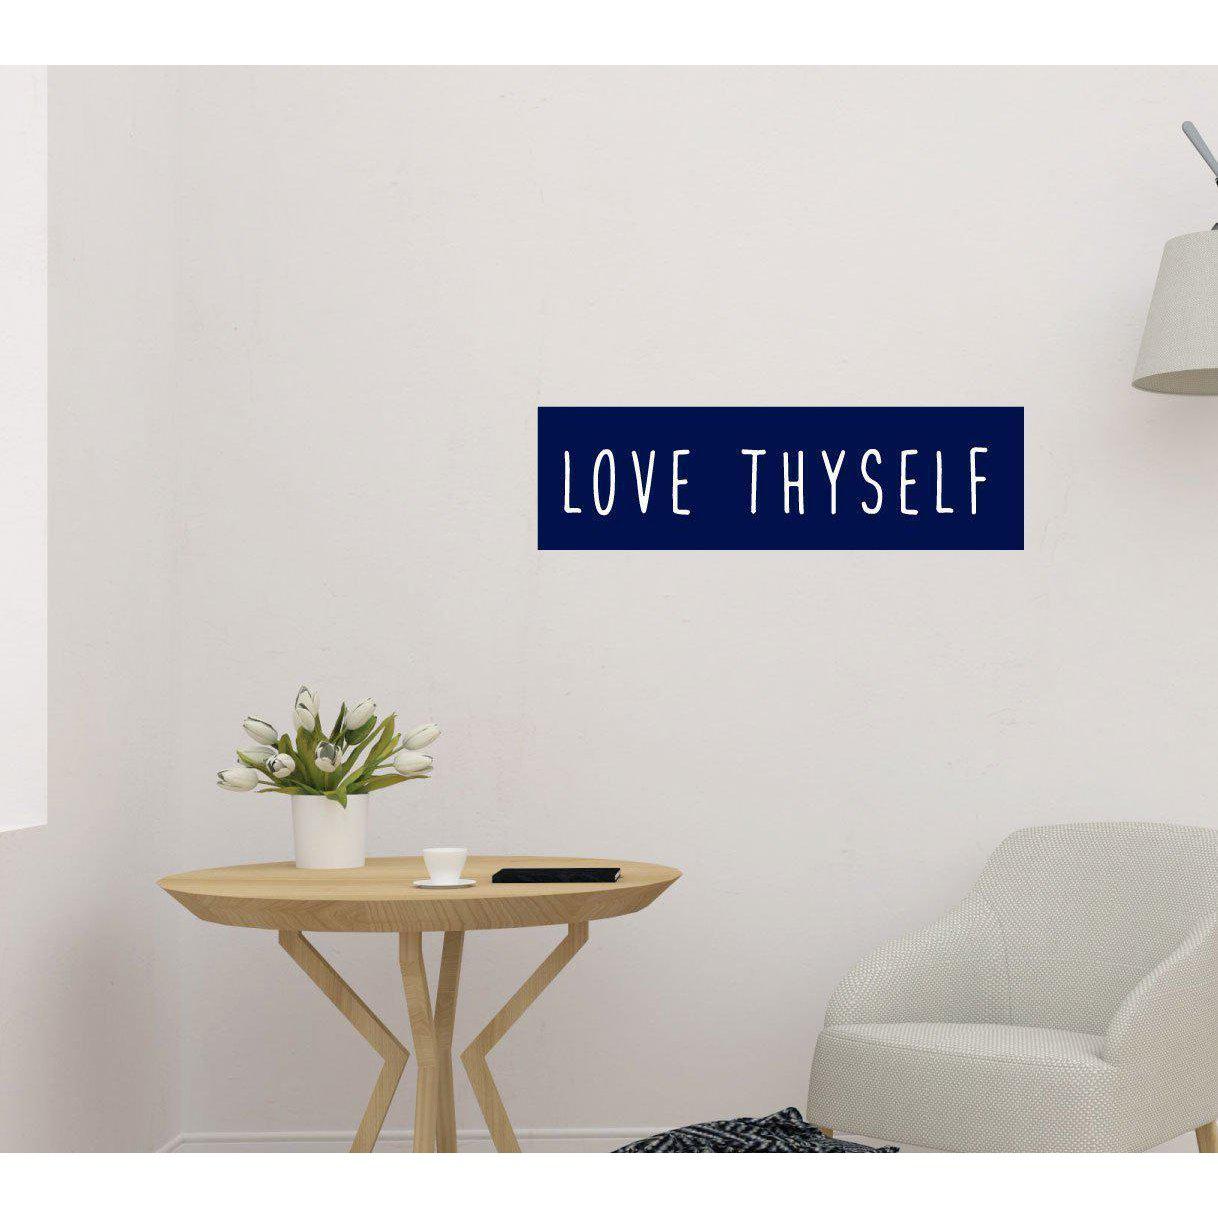 Love Thyself Modern Motivational Wall Sticker Quote